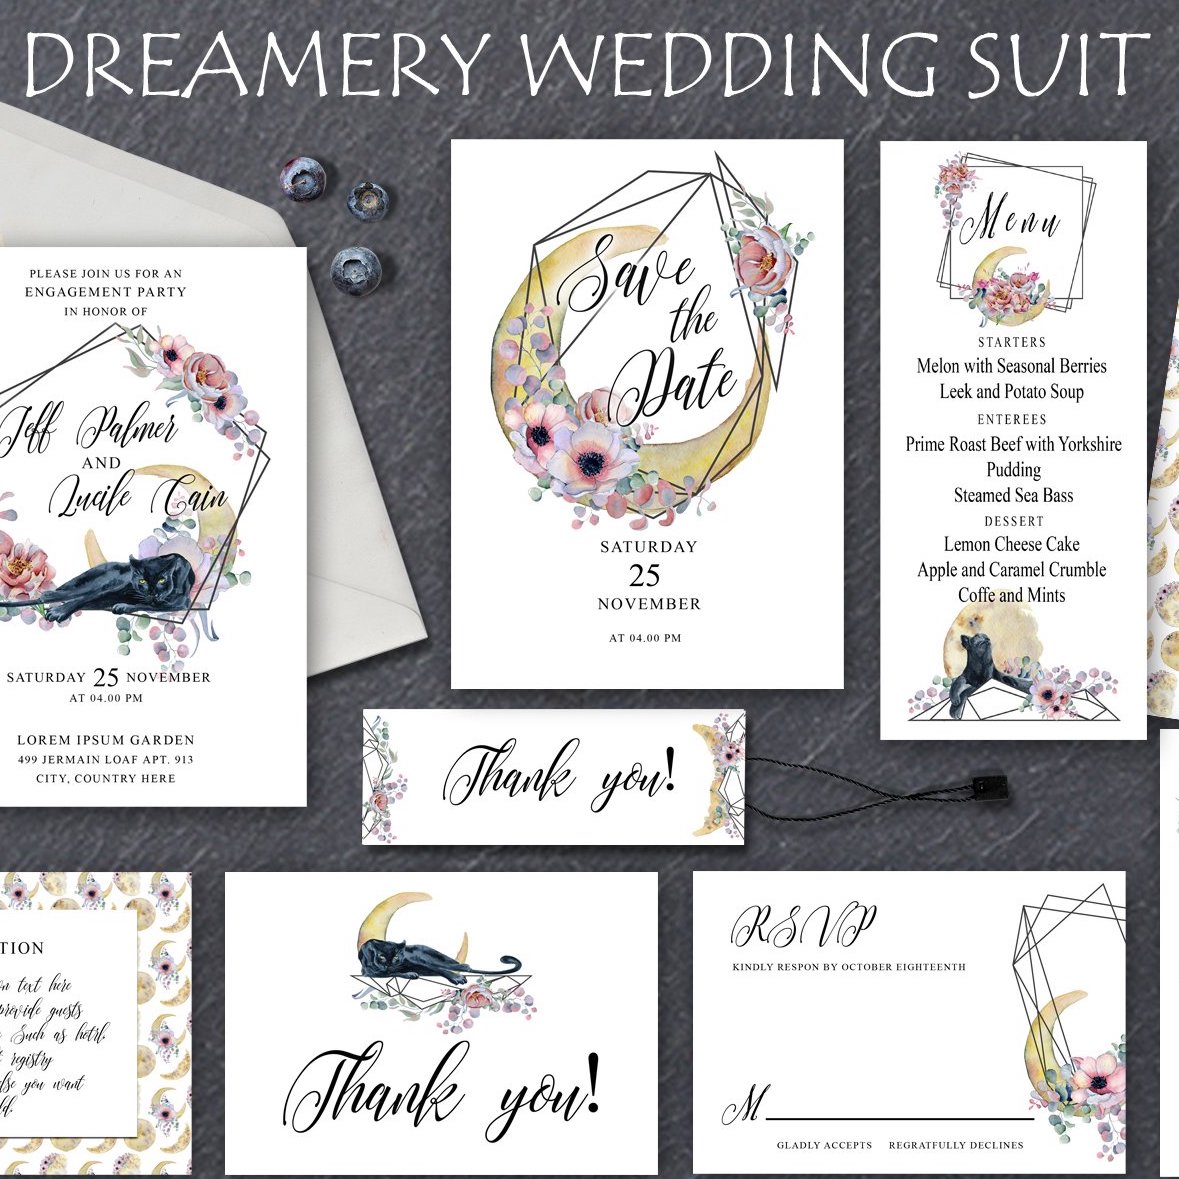 dreamery wedding suit11 1